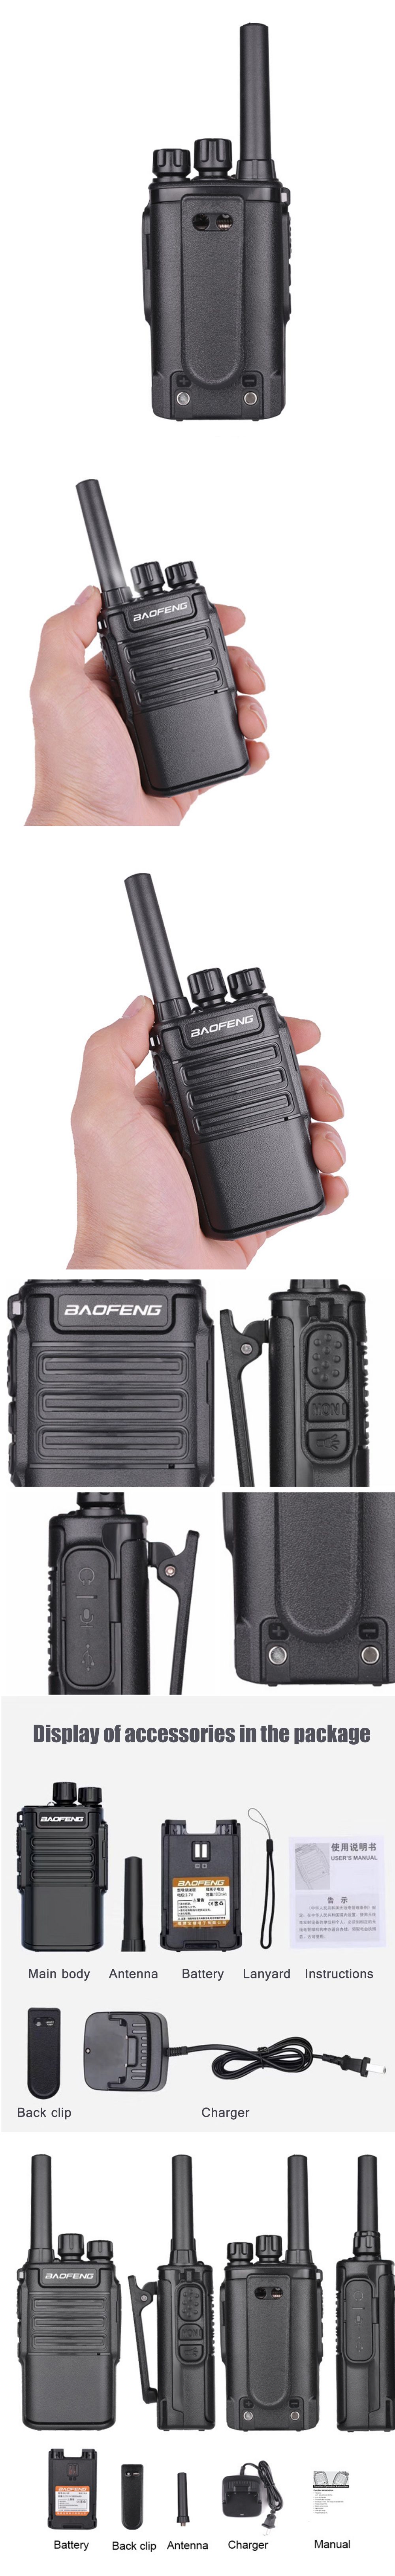 BAOFENG-V8-Portable-Wiress-Walkie-Talkie-1800mAh-Handheld-Two-Way-Radio-Communicator-Transceiver-For-1709473